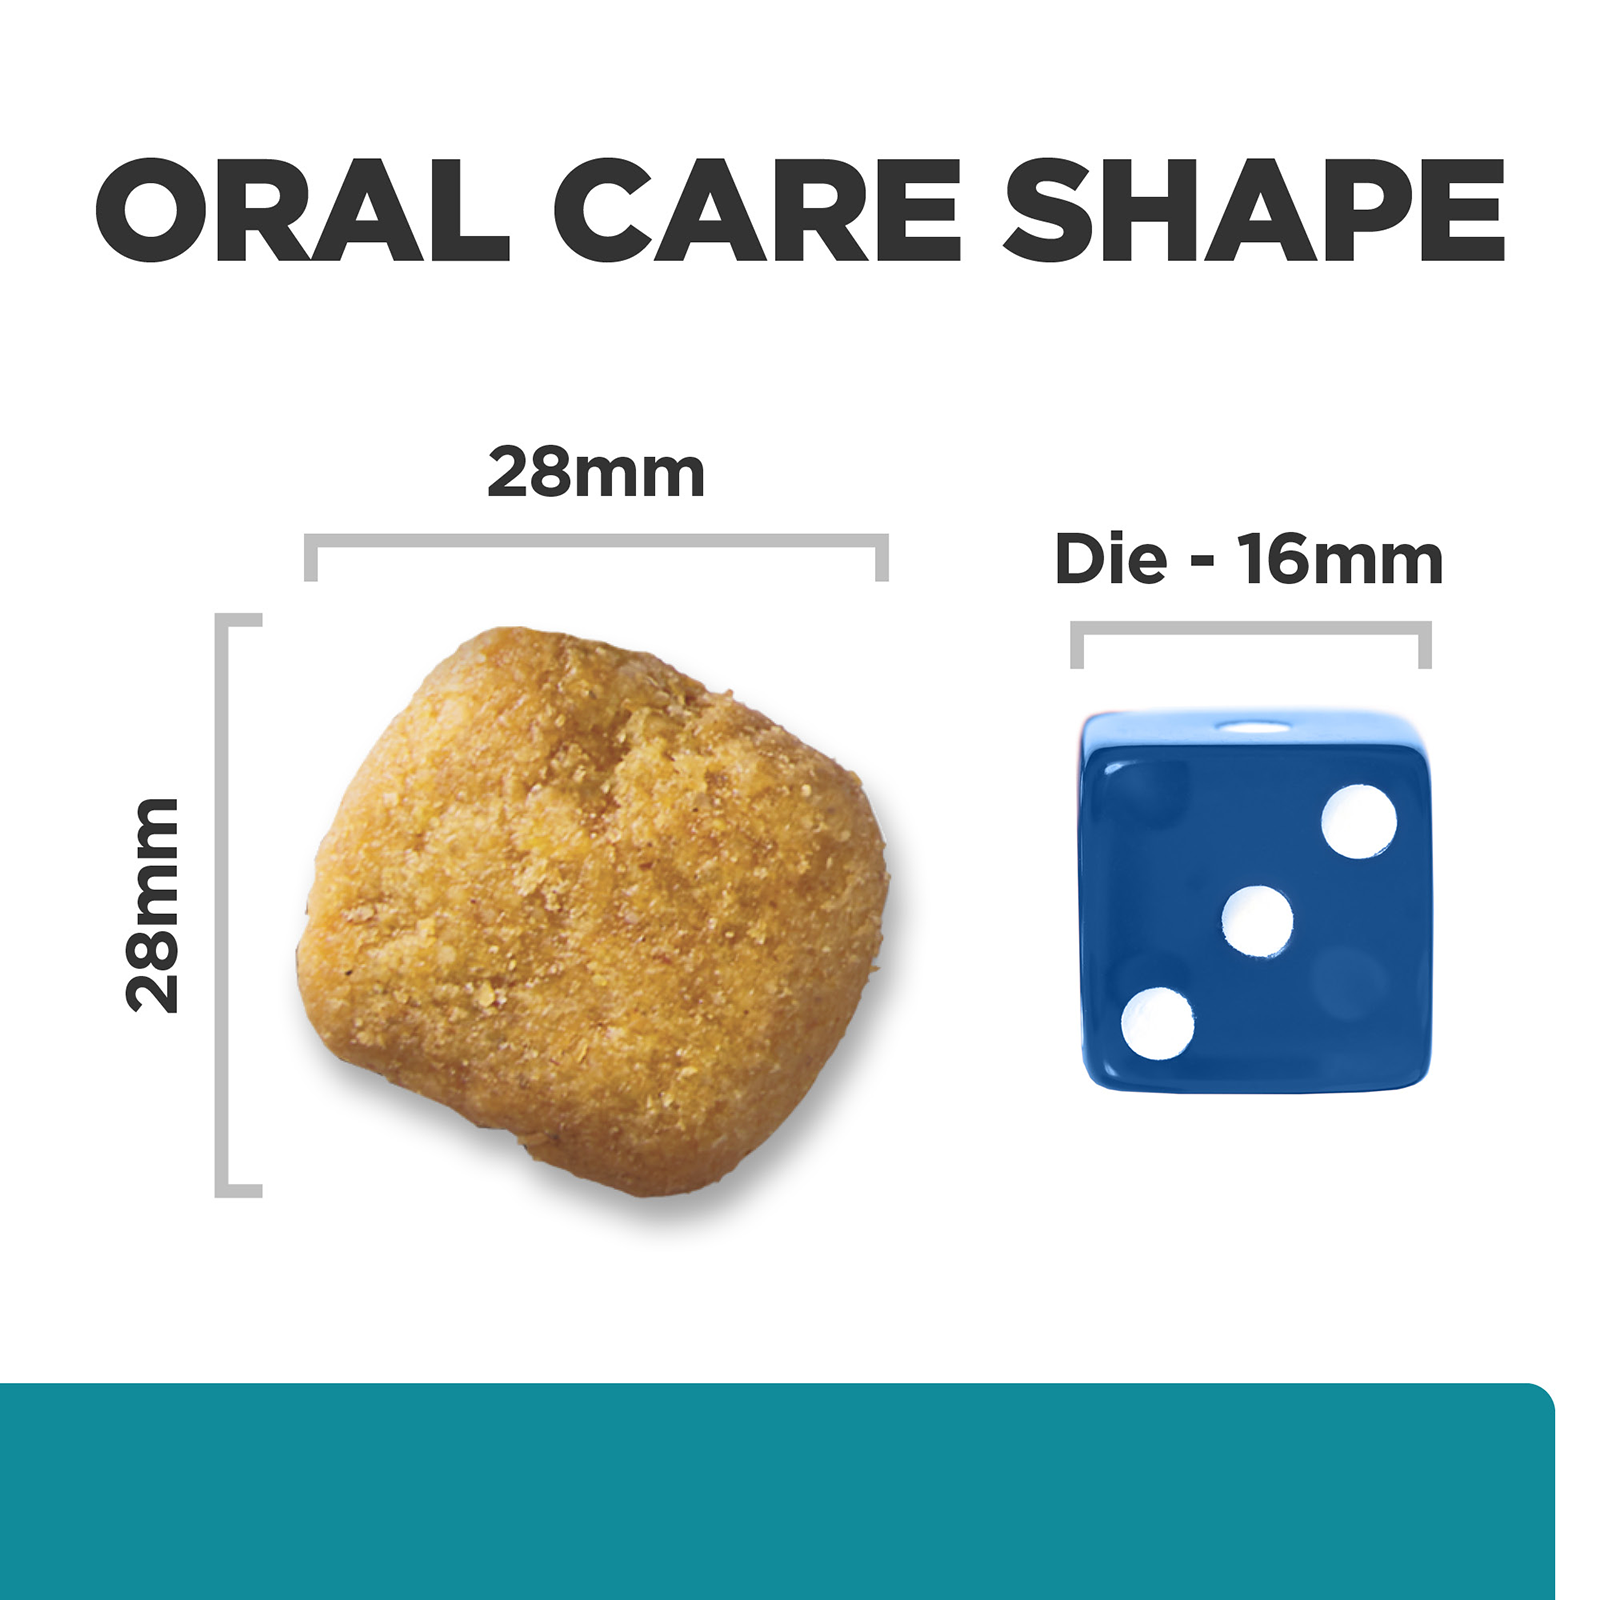 Hill's Prescription Diet Dog Food t/d Dental Care